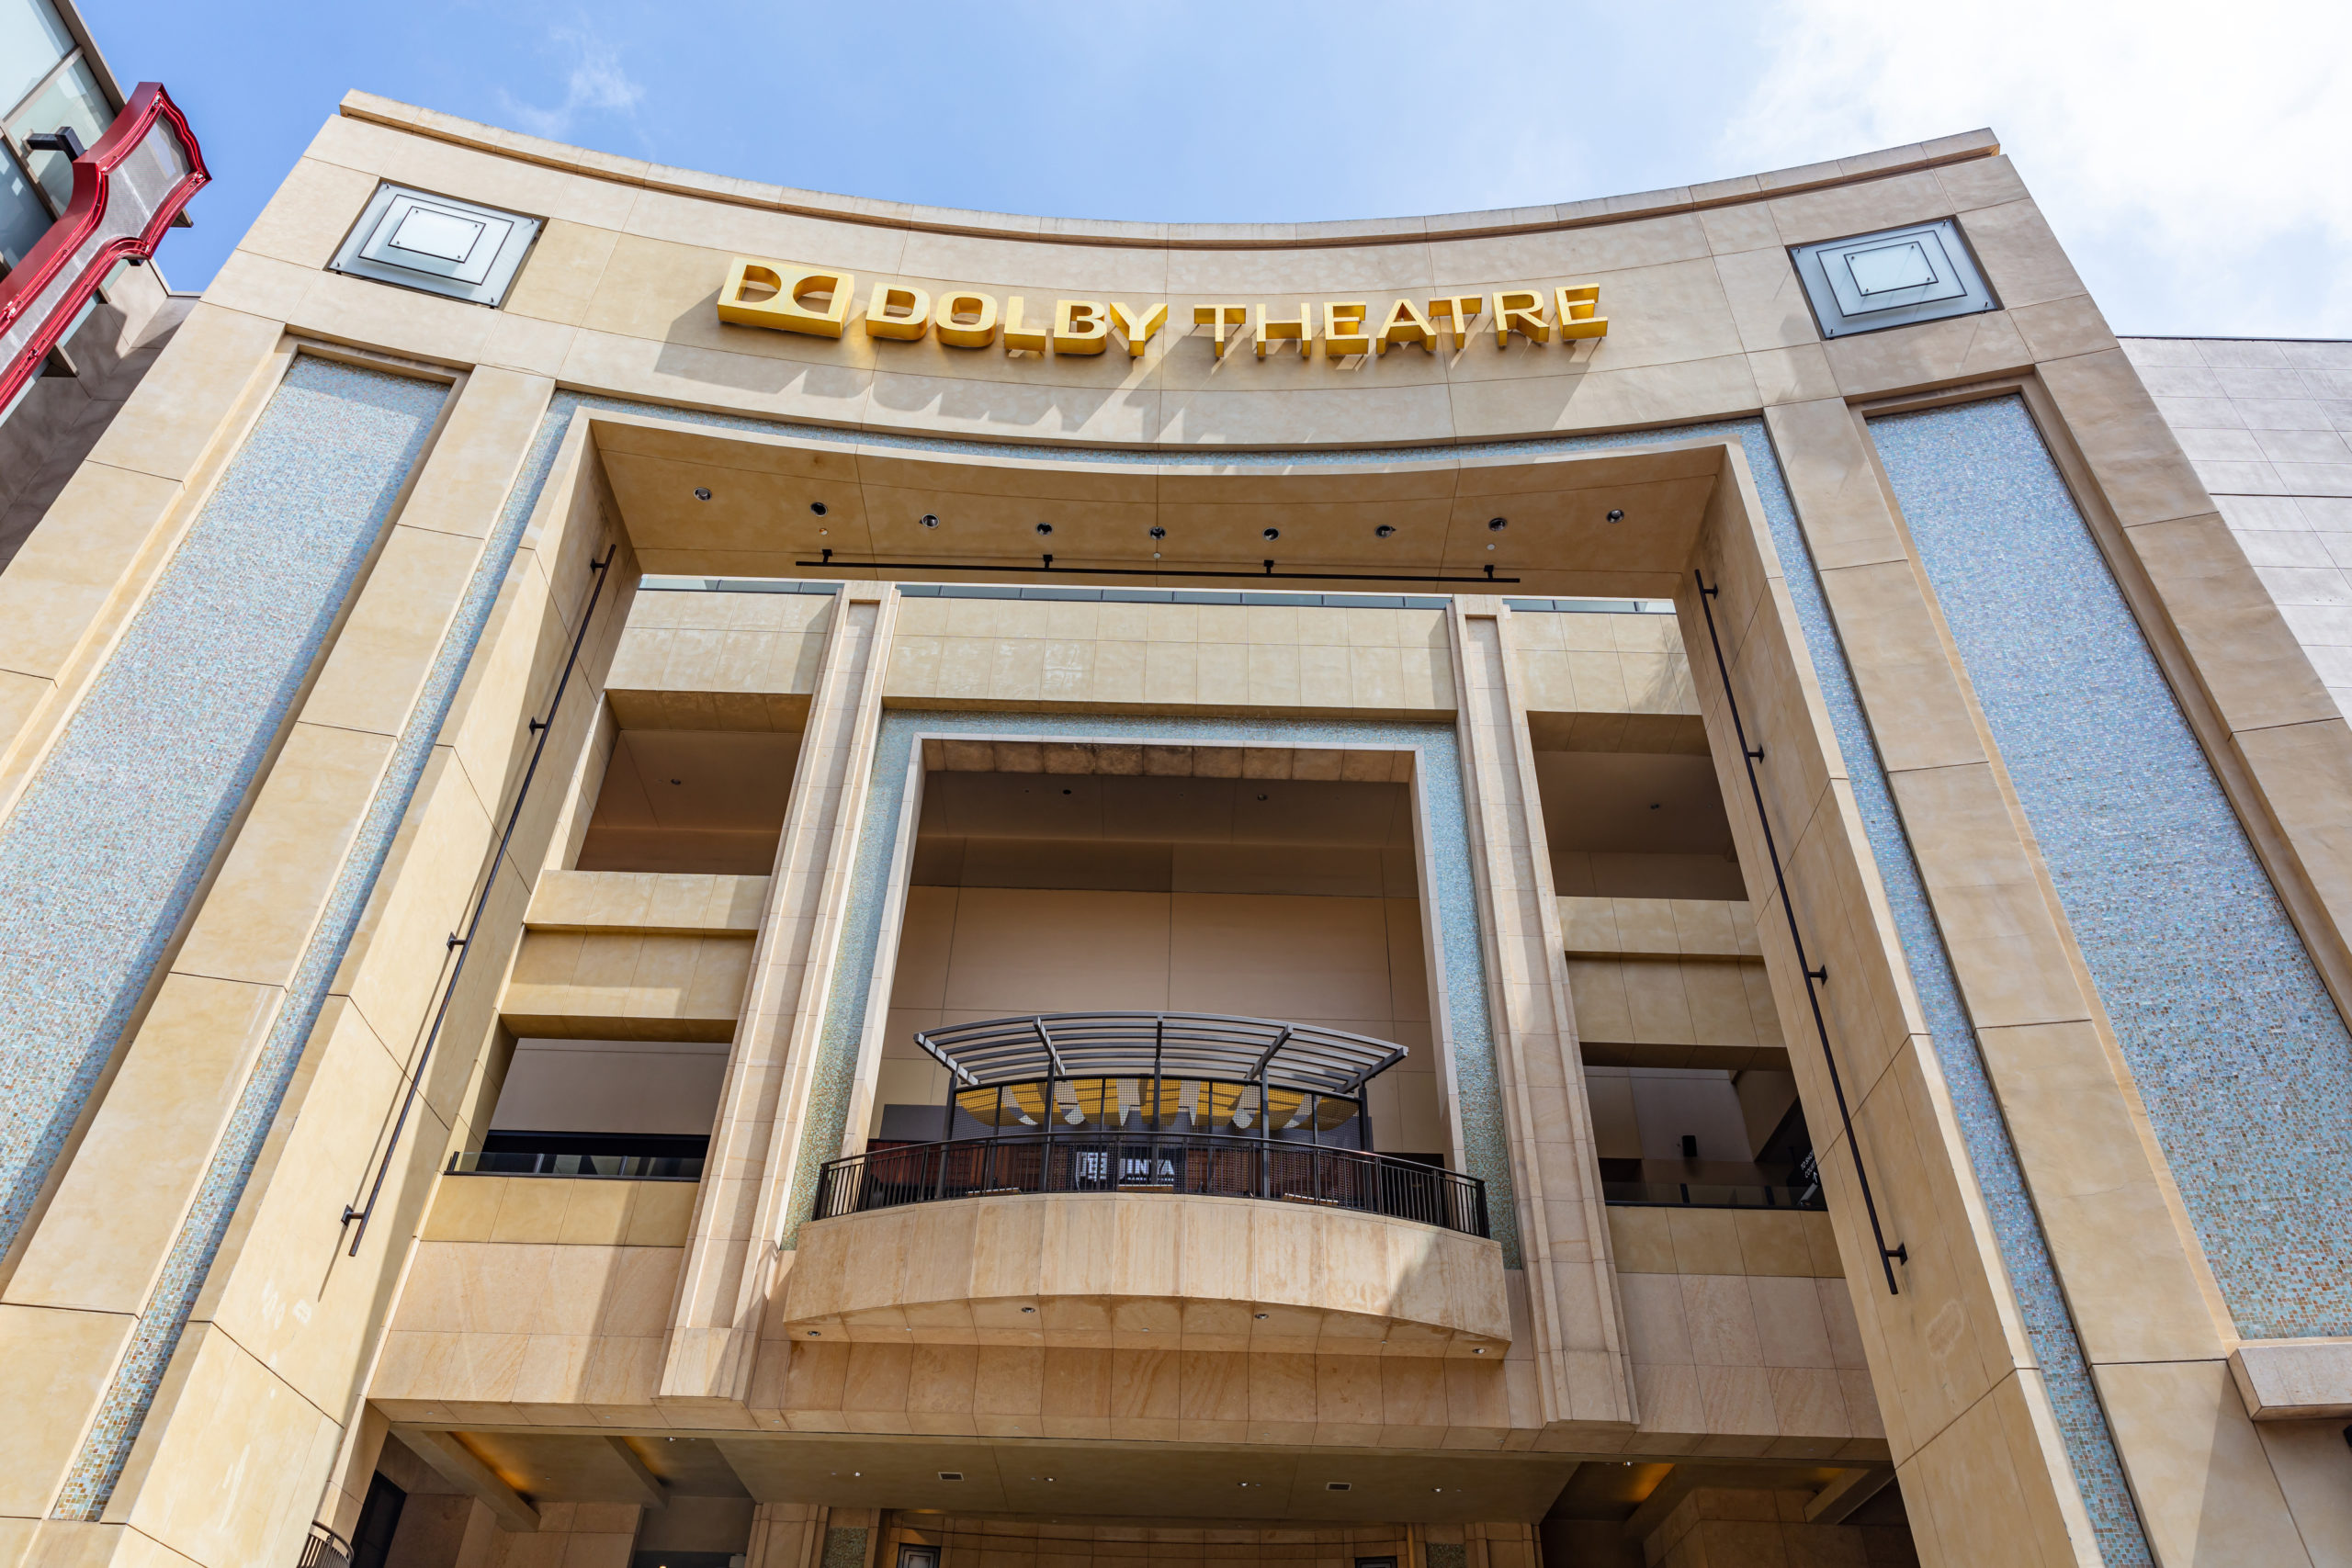 Dolby Theatre Facade